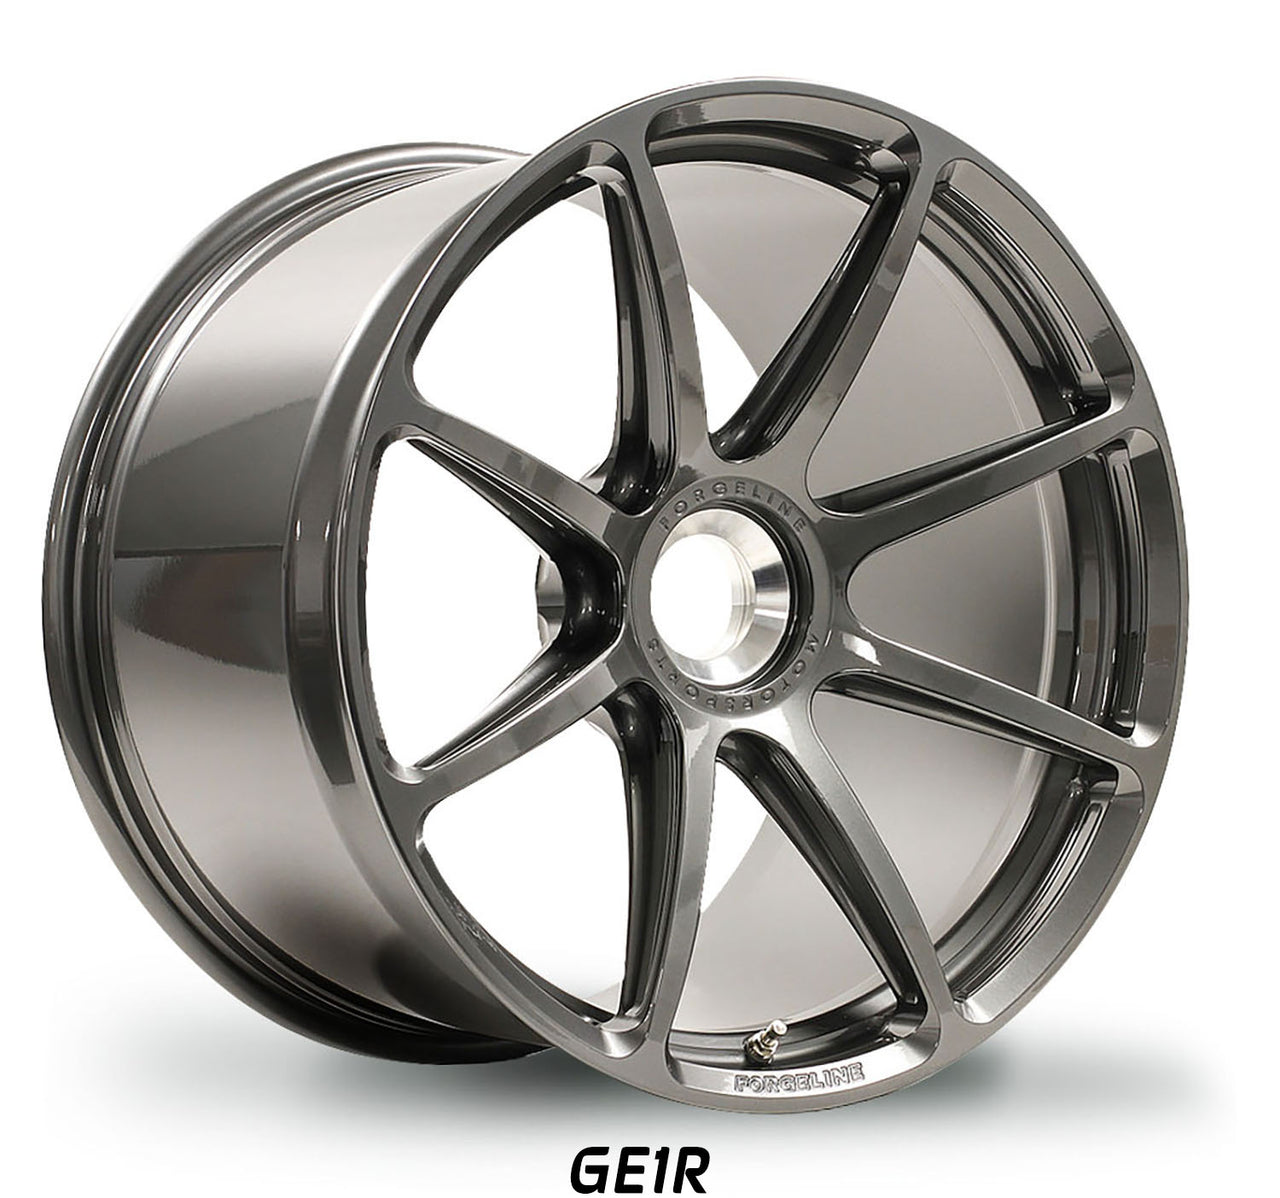 Pearl Gray Forgeline GE1R for center lock Porsche GT3 forged Motorsports Series wheel set